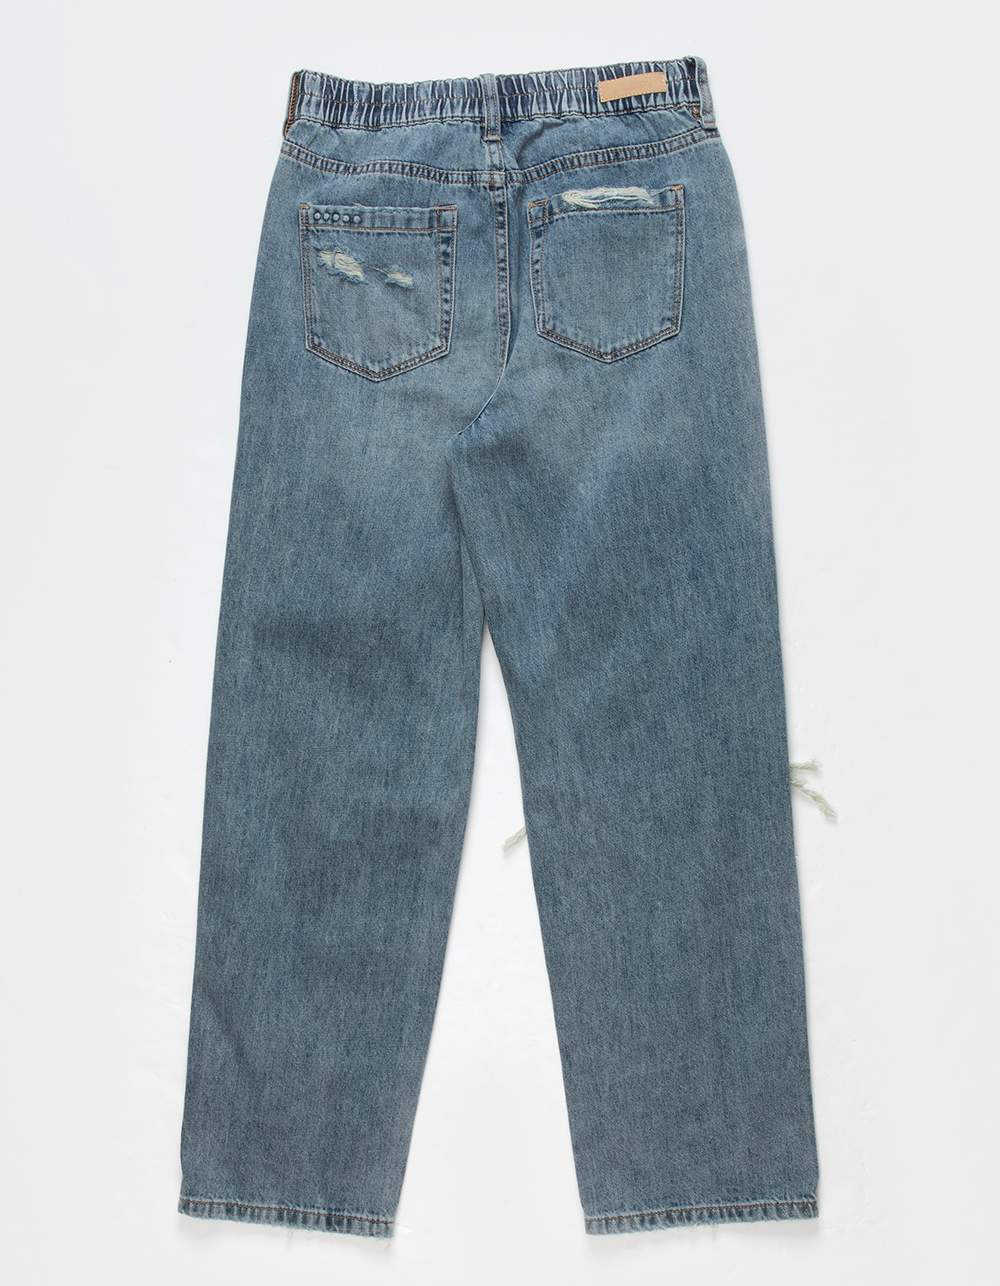 BLANK NYC Destructed Girls Jeans - MEDIUM WASH | Tillys